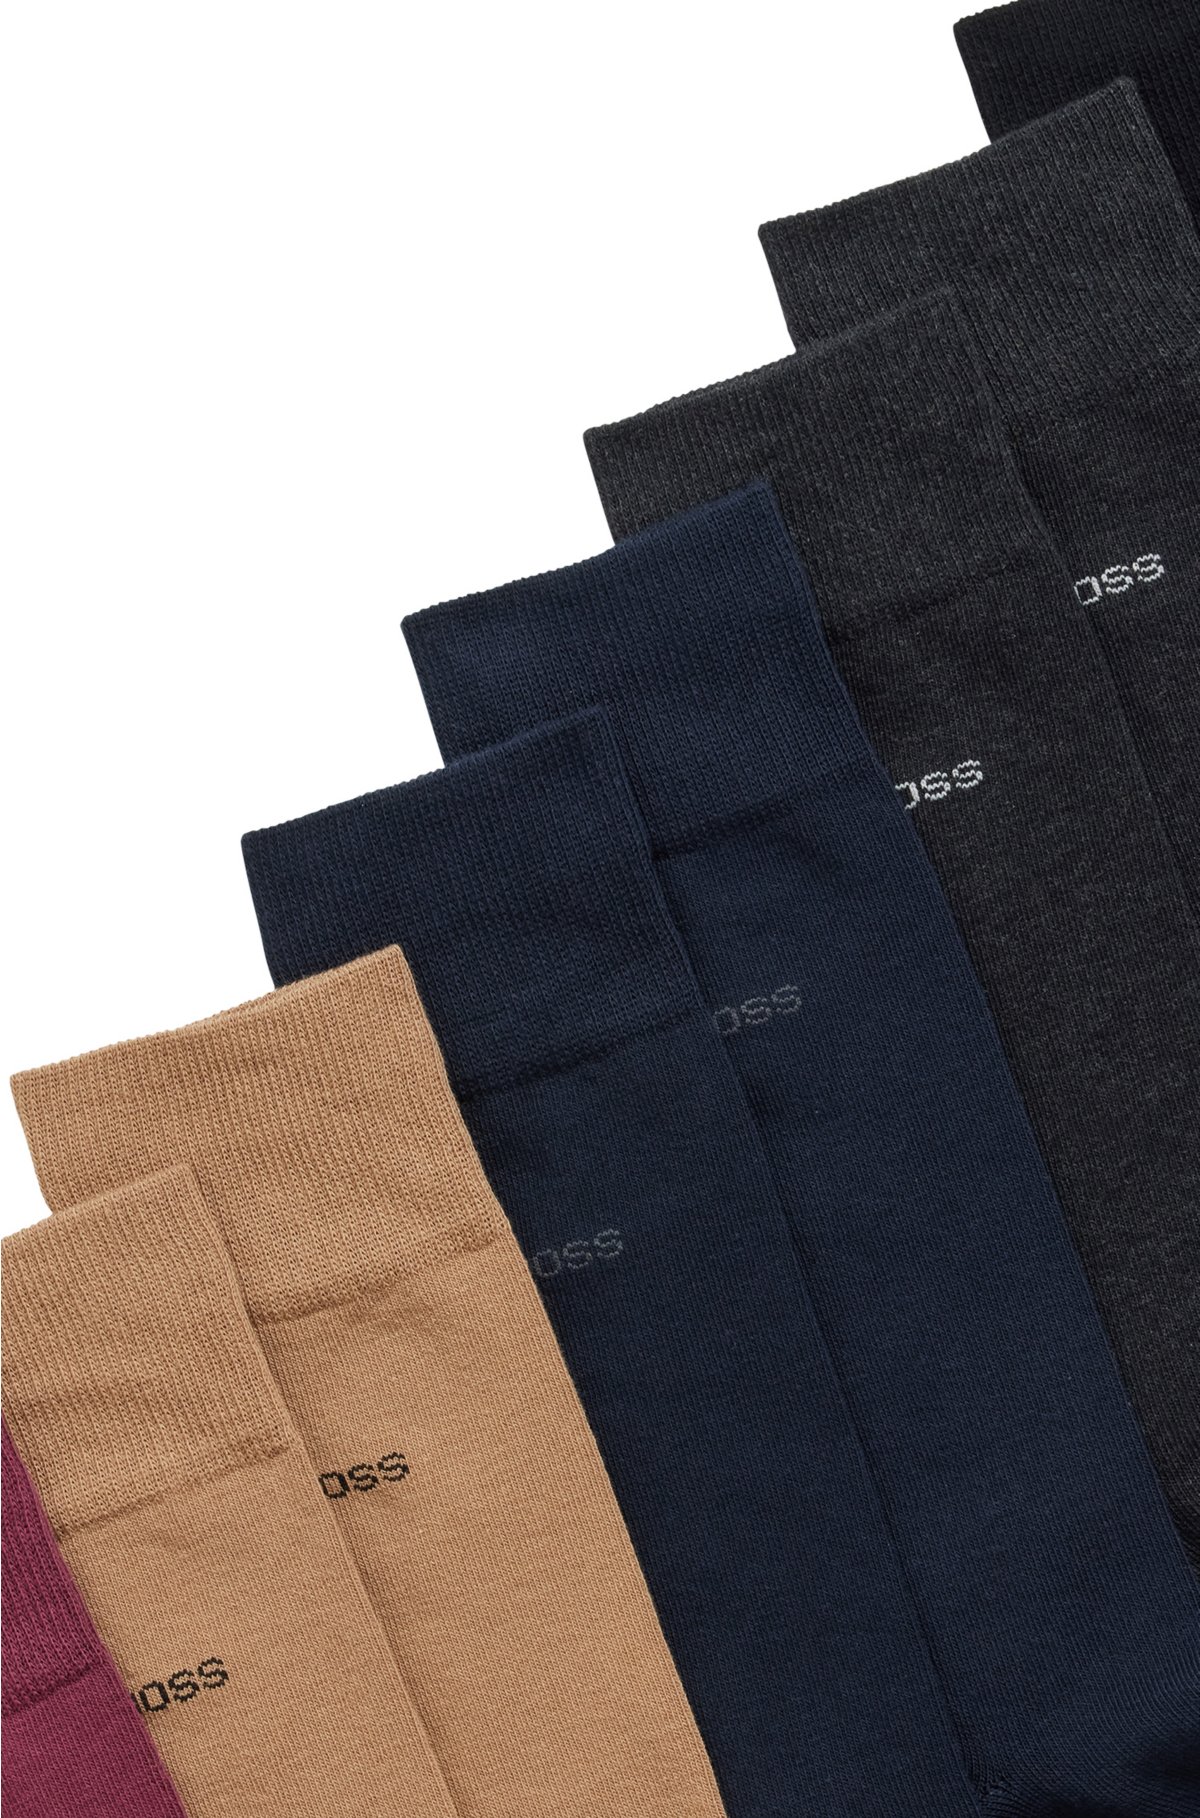 Five-pack in BOSS of socks cotton blend regular-length a -